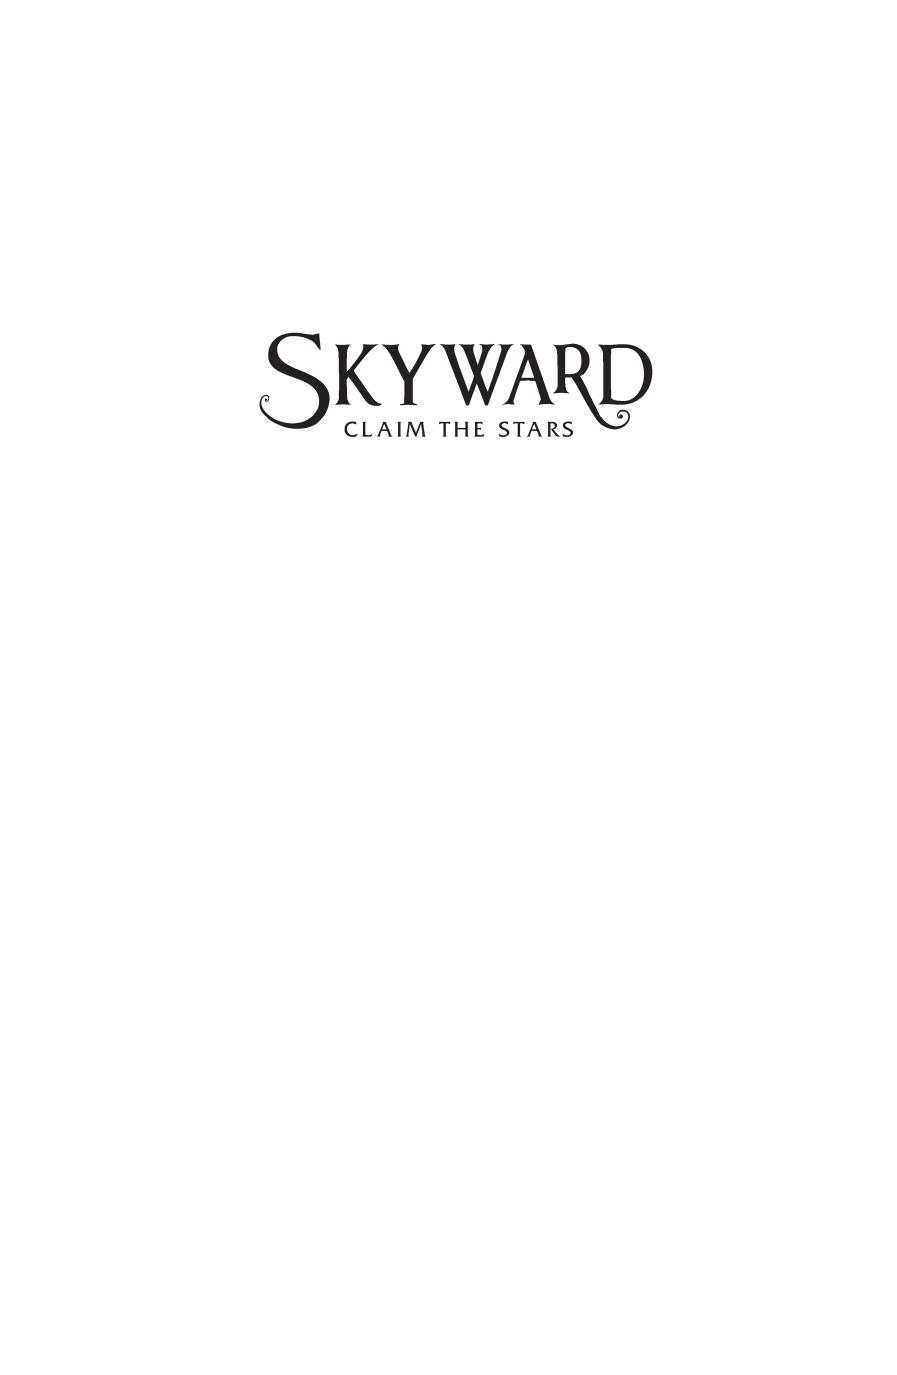 Skyward by Brandon Sanderson